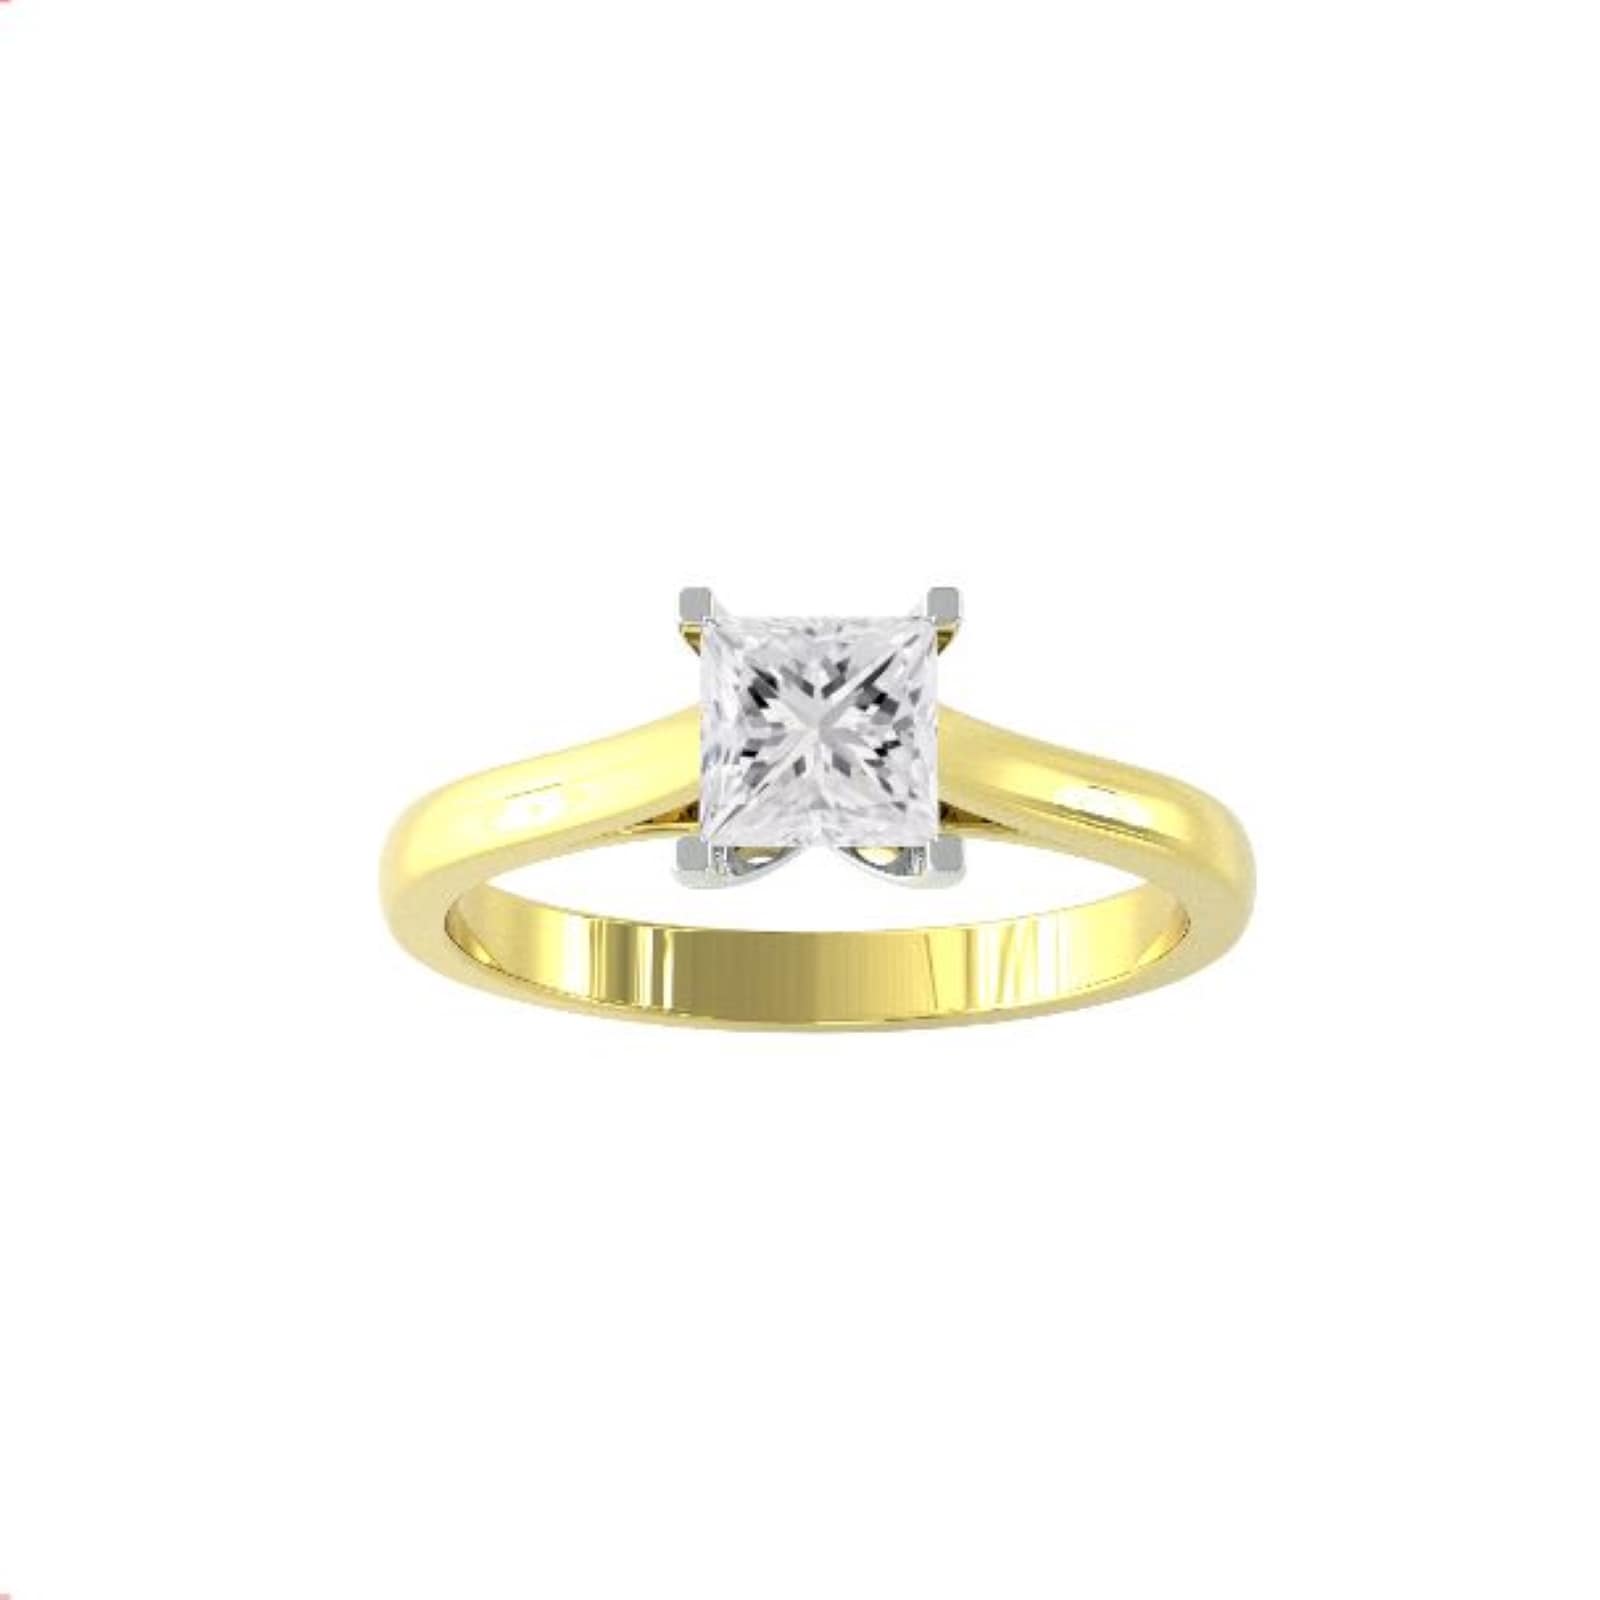 18ct Yellow Gold 0.75cttw Princess Cut Diamond Ring - Ring Size O.5